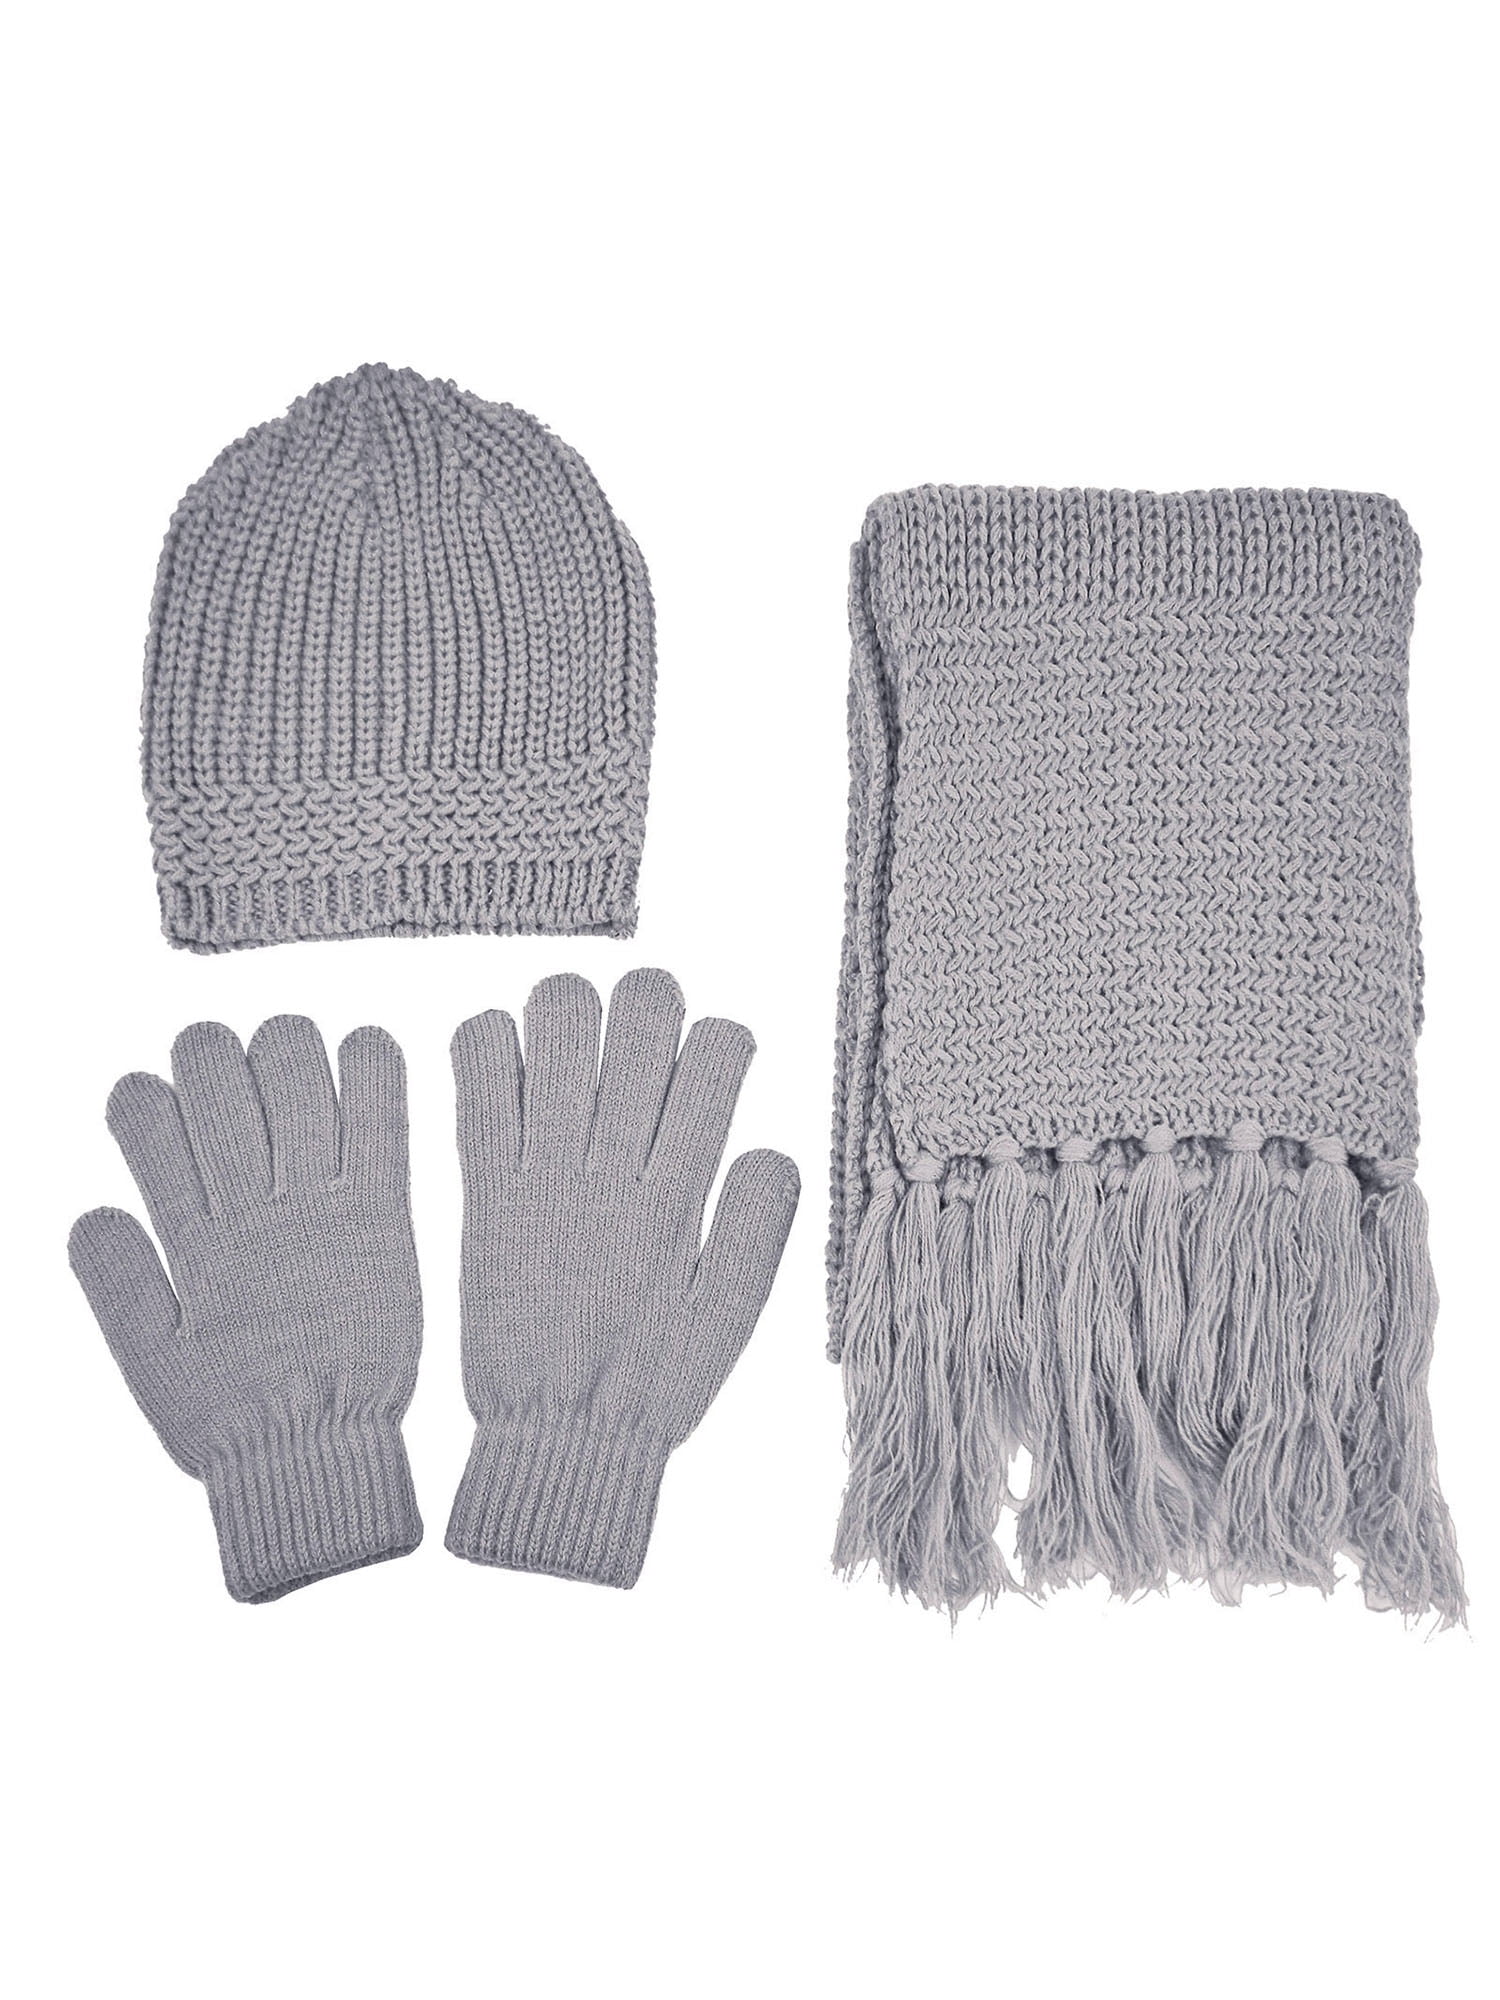 Sportoli Women’s Girls’ kids 3-Piece Cable Knit Cold Weather Set Hat Scarf Glove 